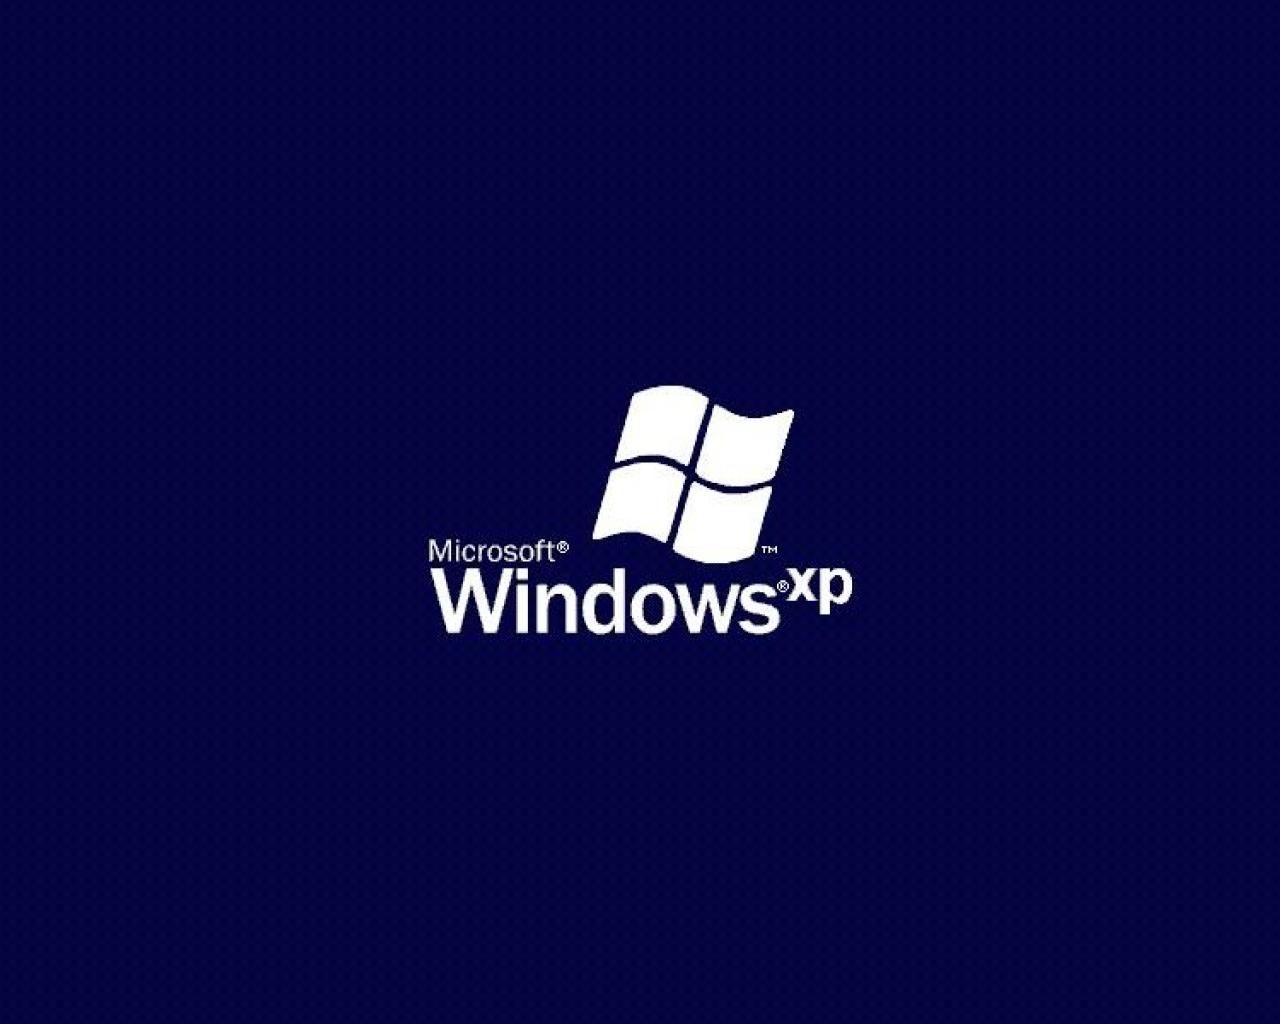 windows xp wallpaper - (#51520) - HQ Desktop Wallpapers ...